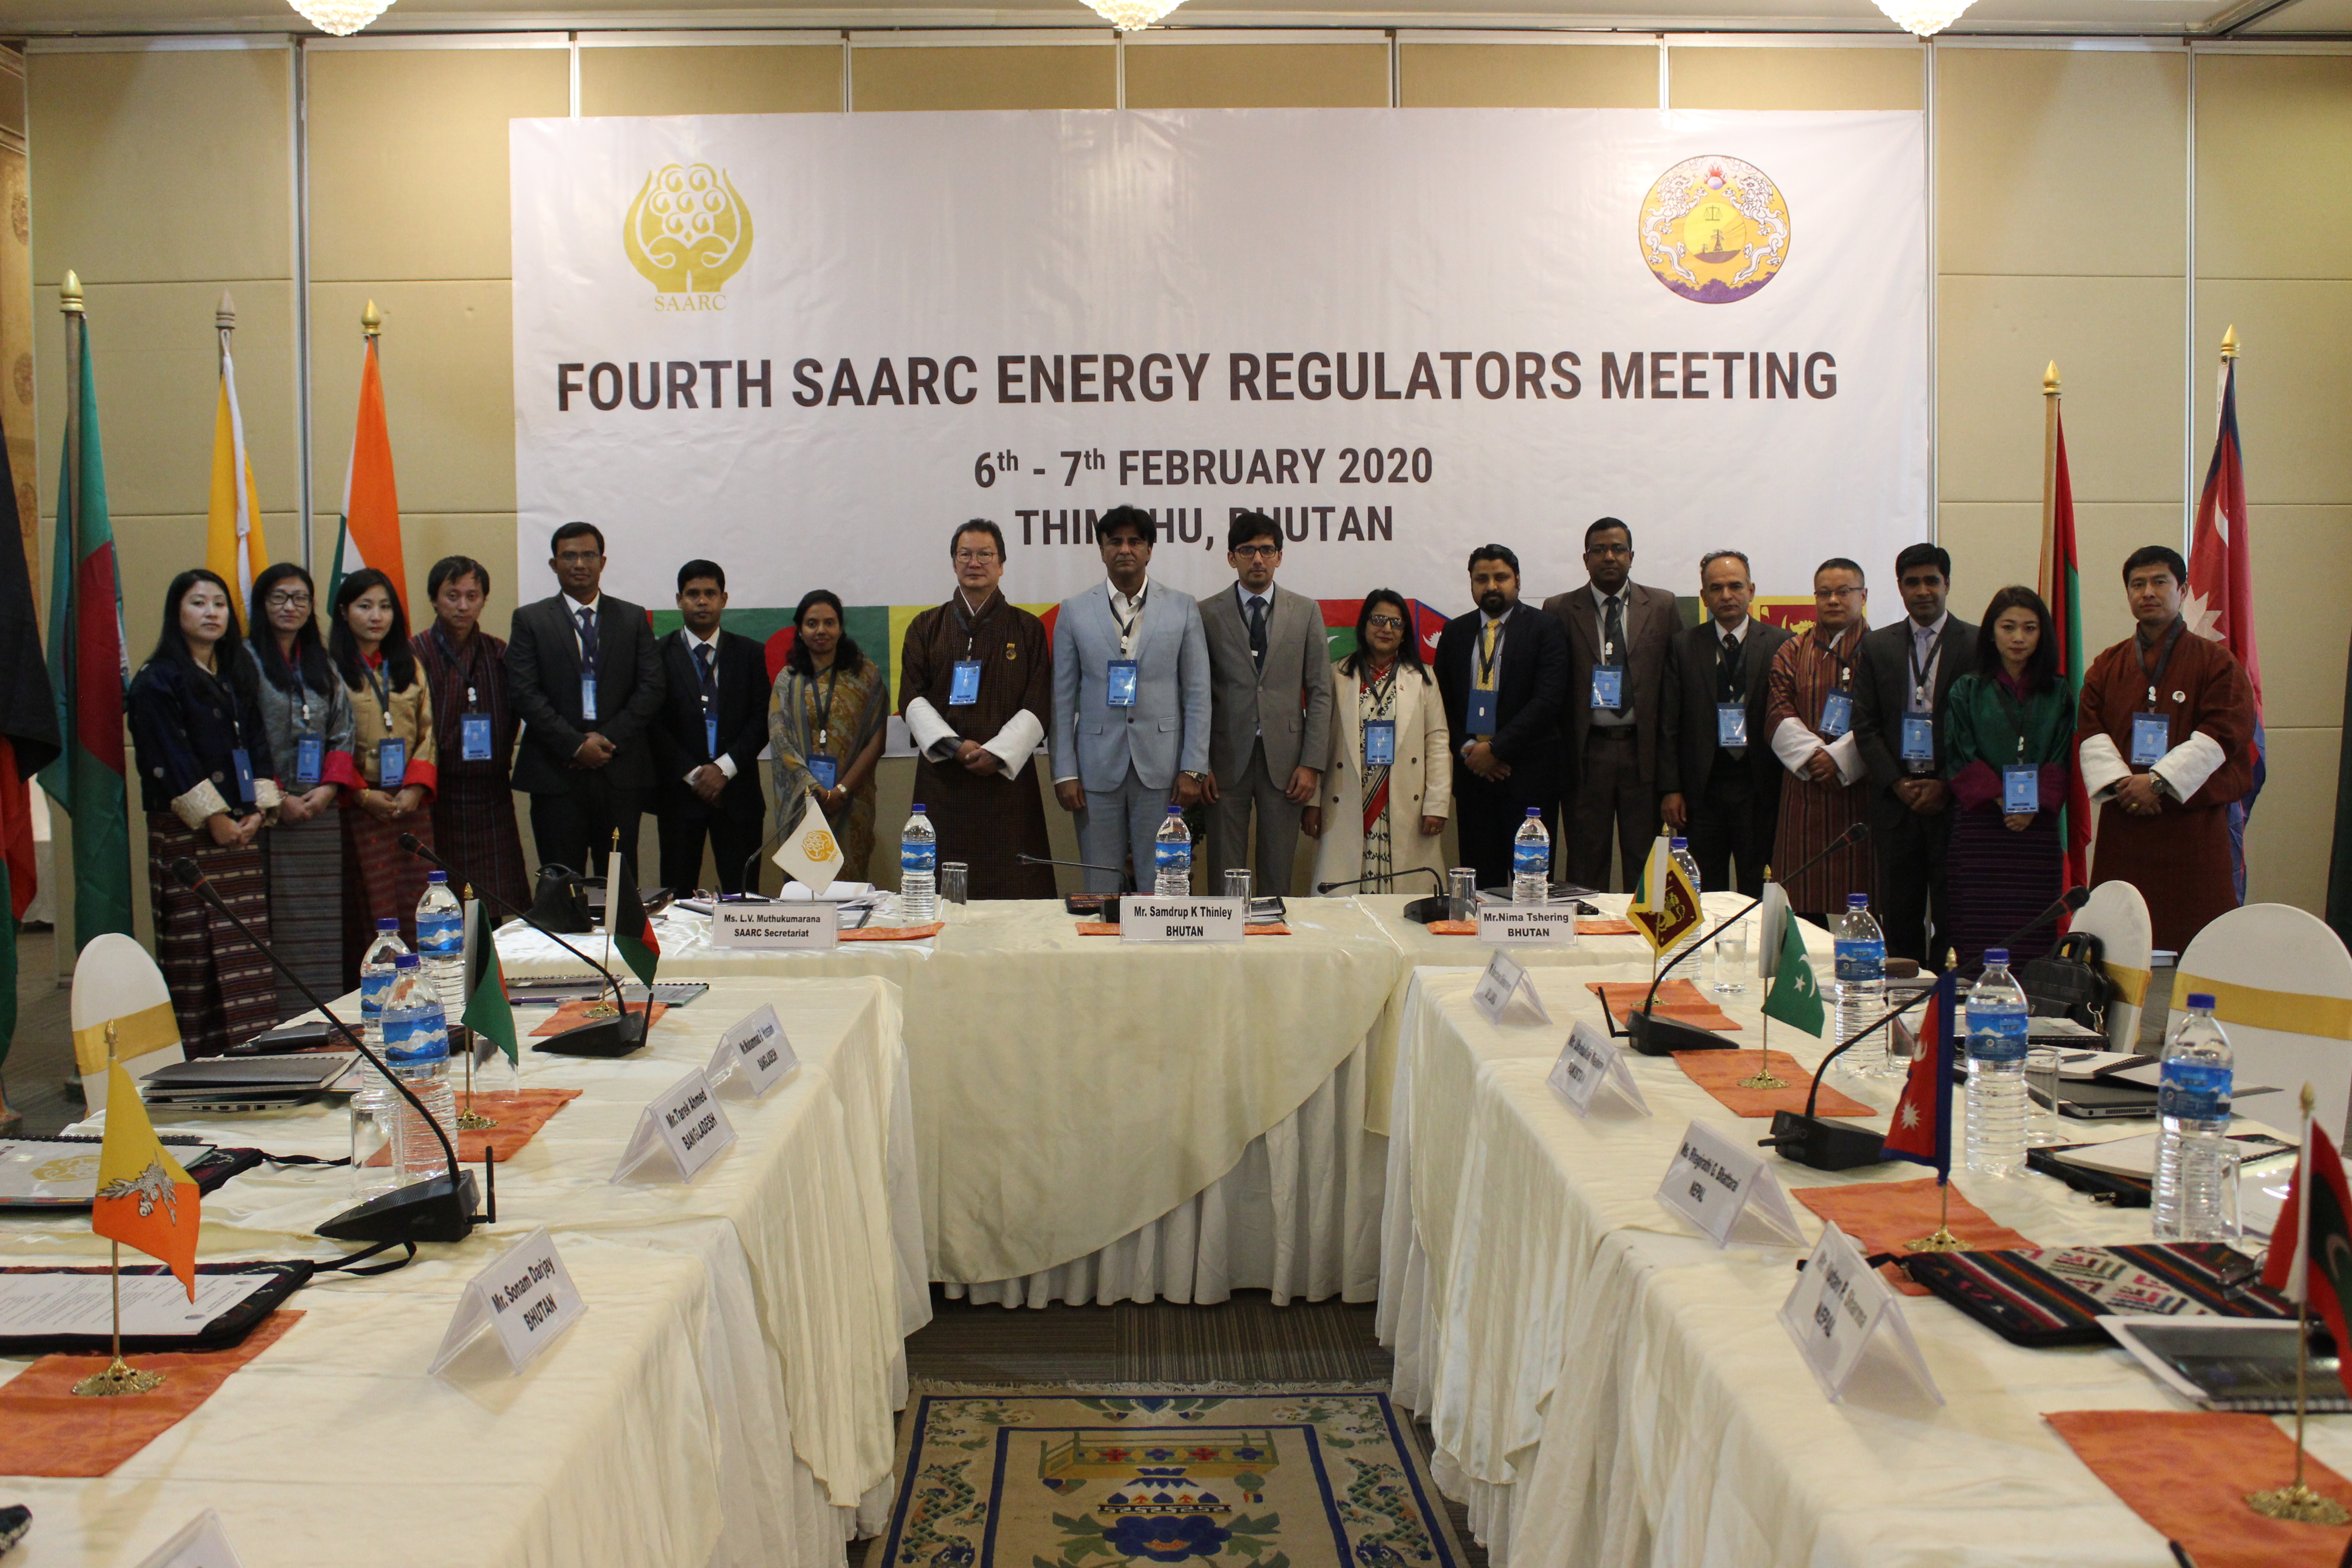 Group picture at Fourth SAARC Energy Regulators meeting, 6-7 Feb 2020, Thimphu, Bhutan